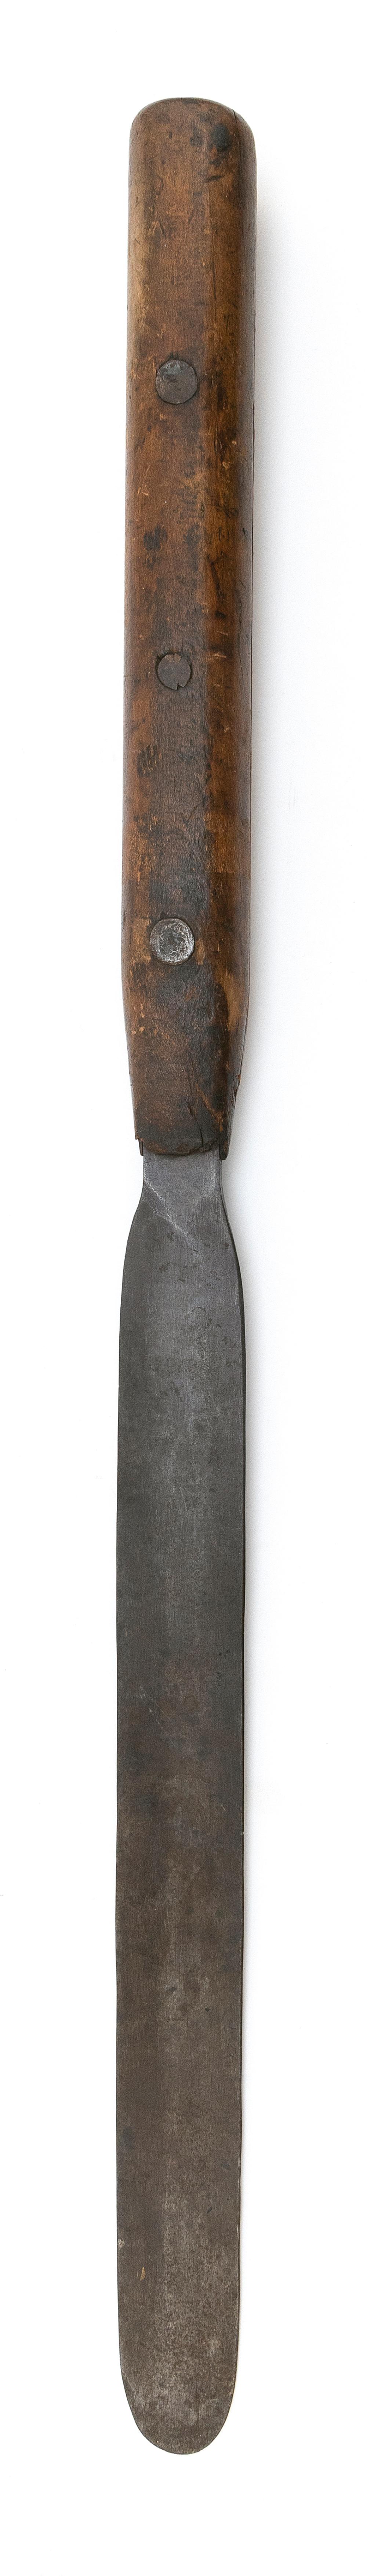 STEEL FLENSING KNIFE MID 19TH CENTURY 34d7fb